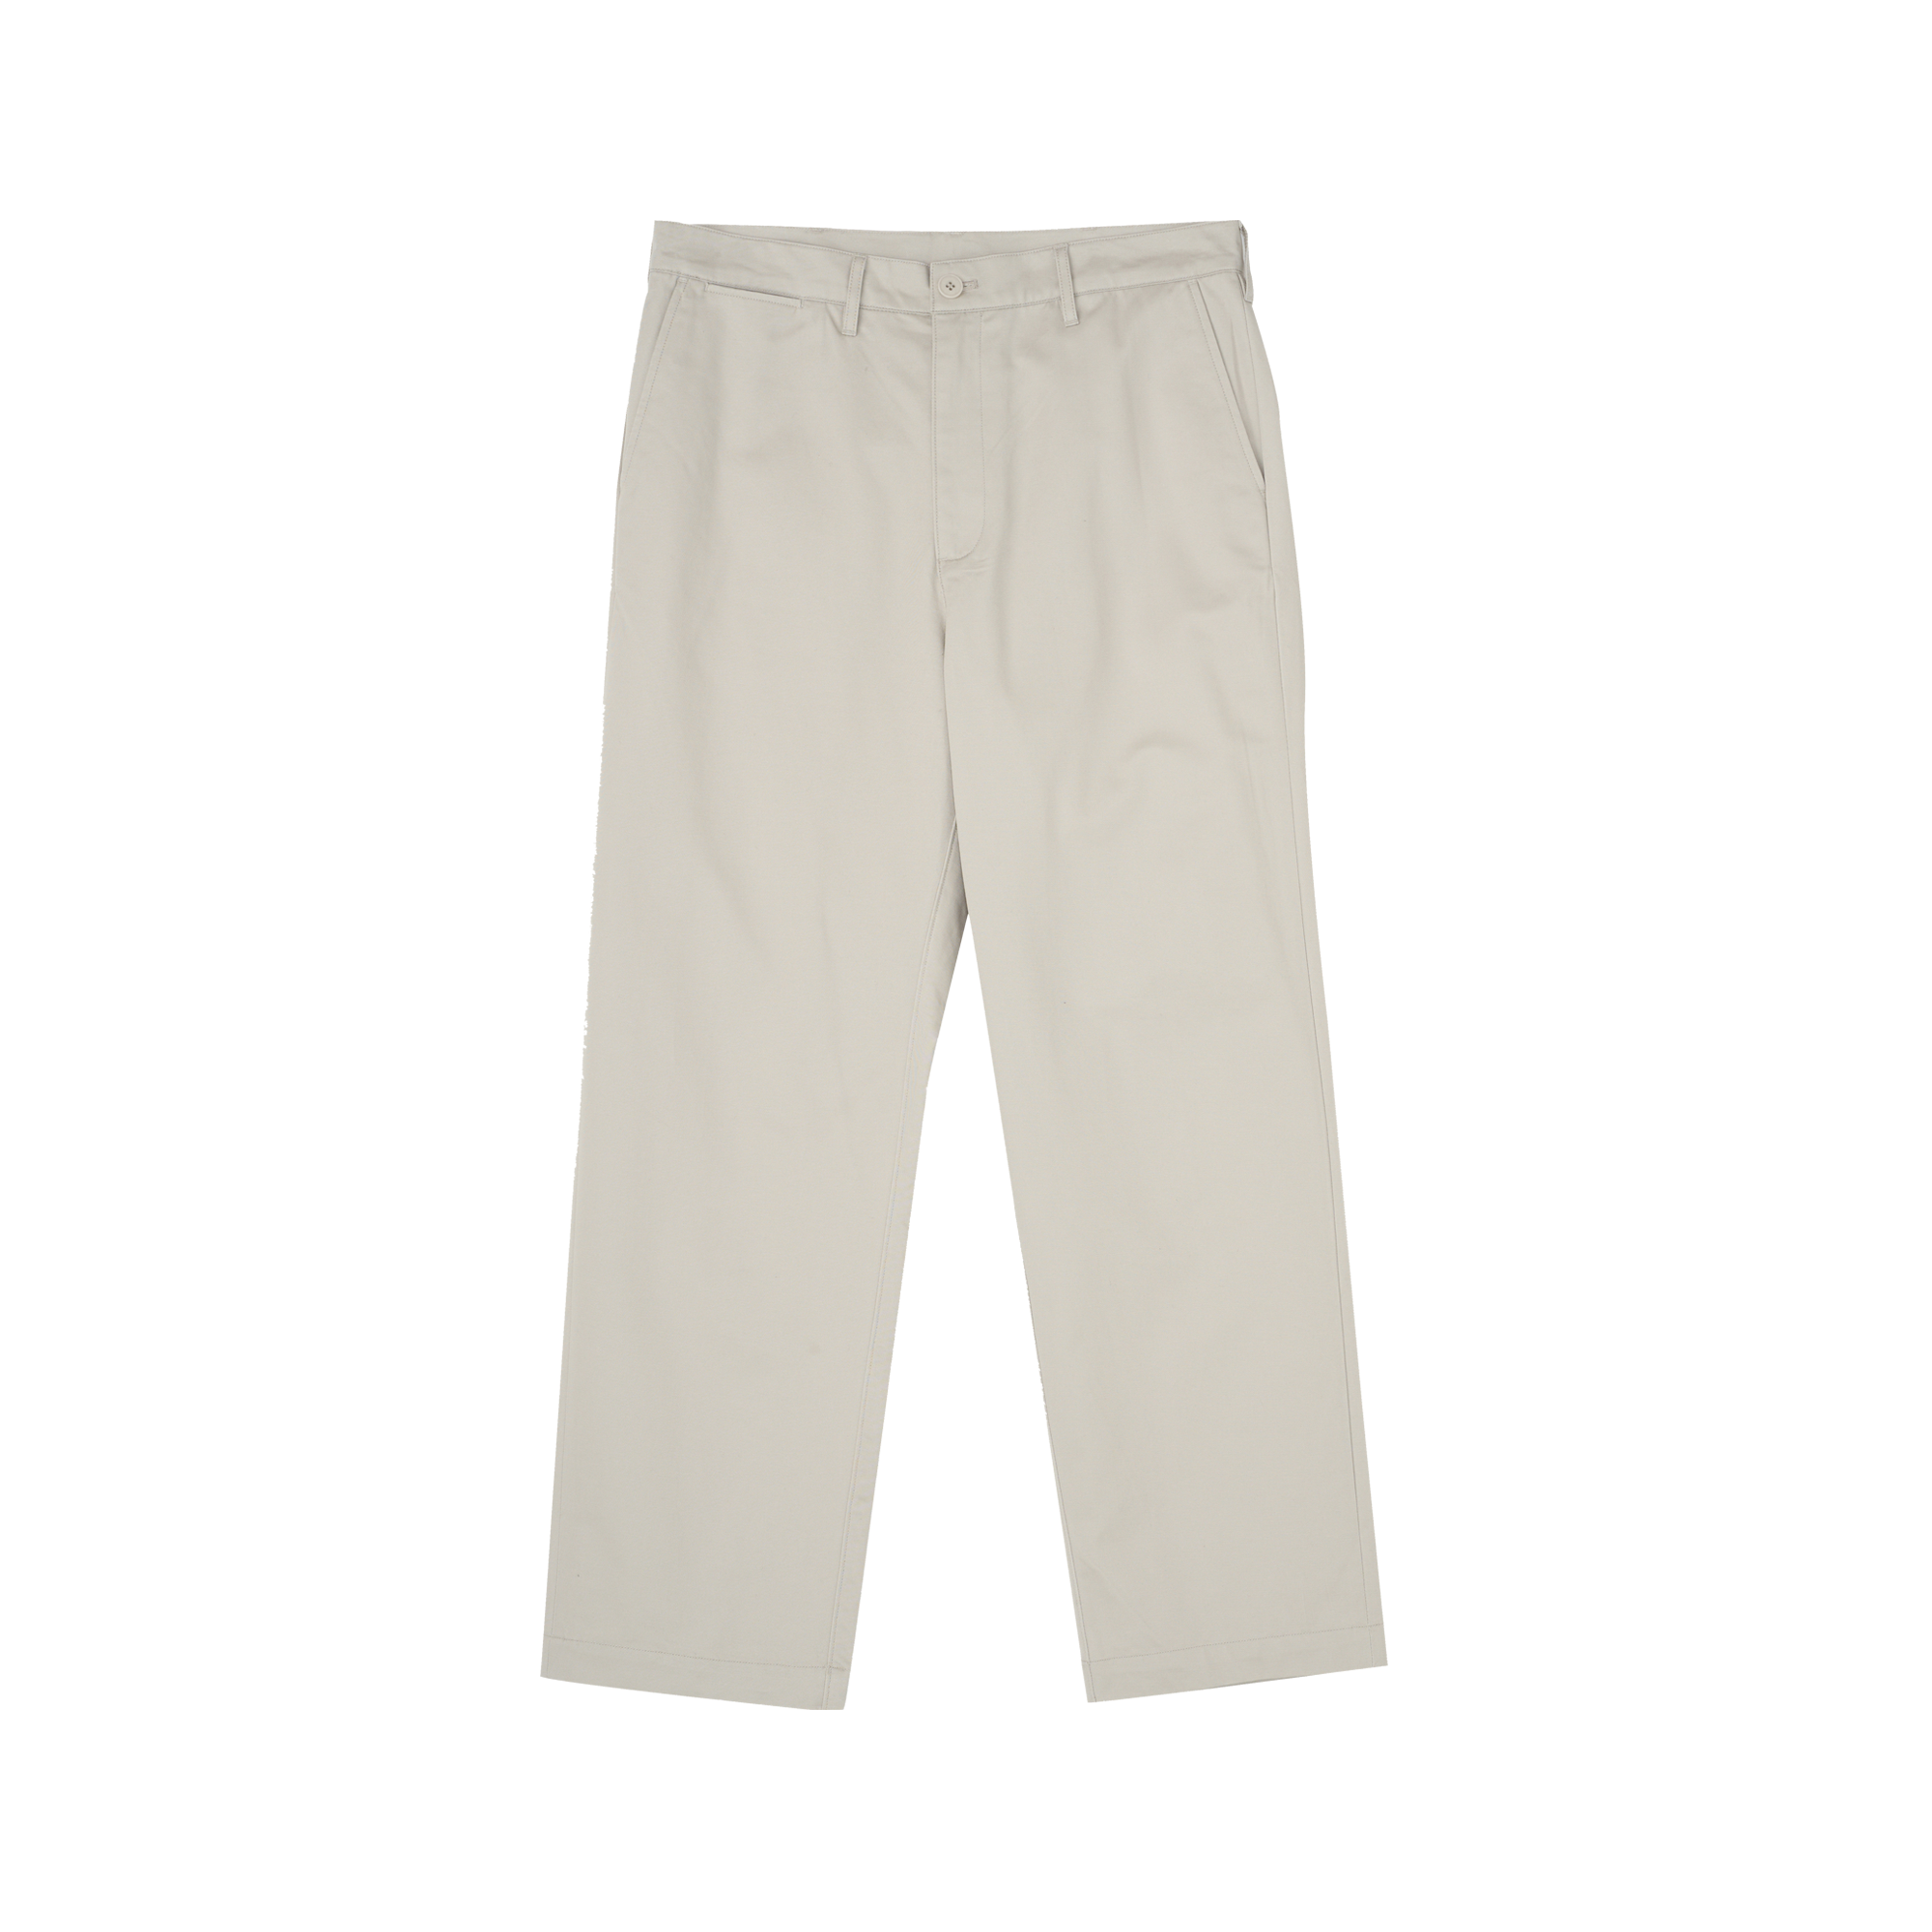 Regular Cotton Pants (Sand Beige)